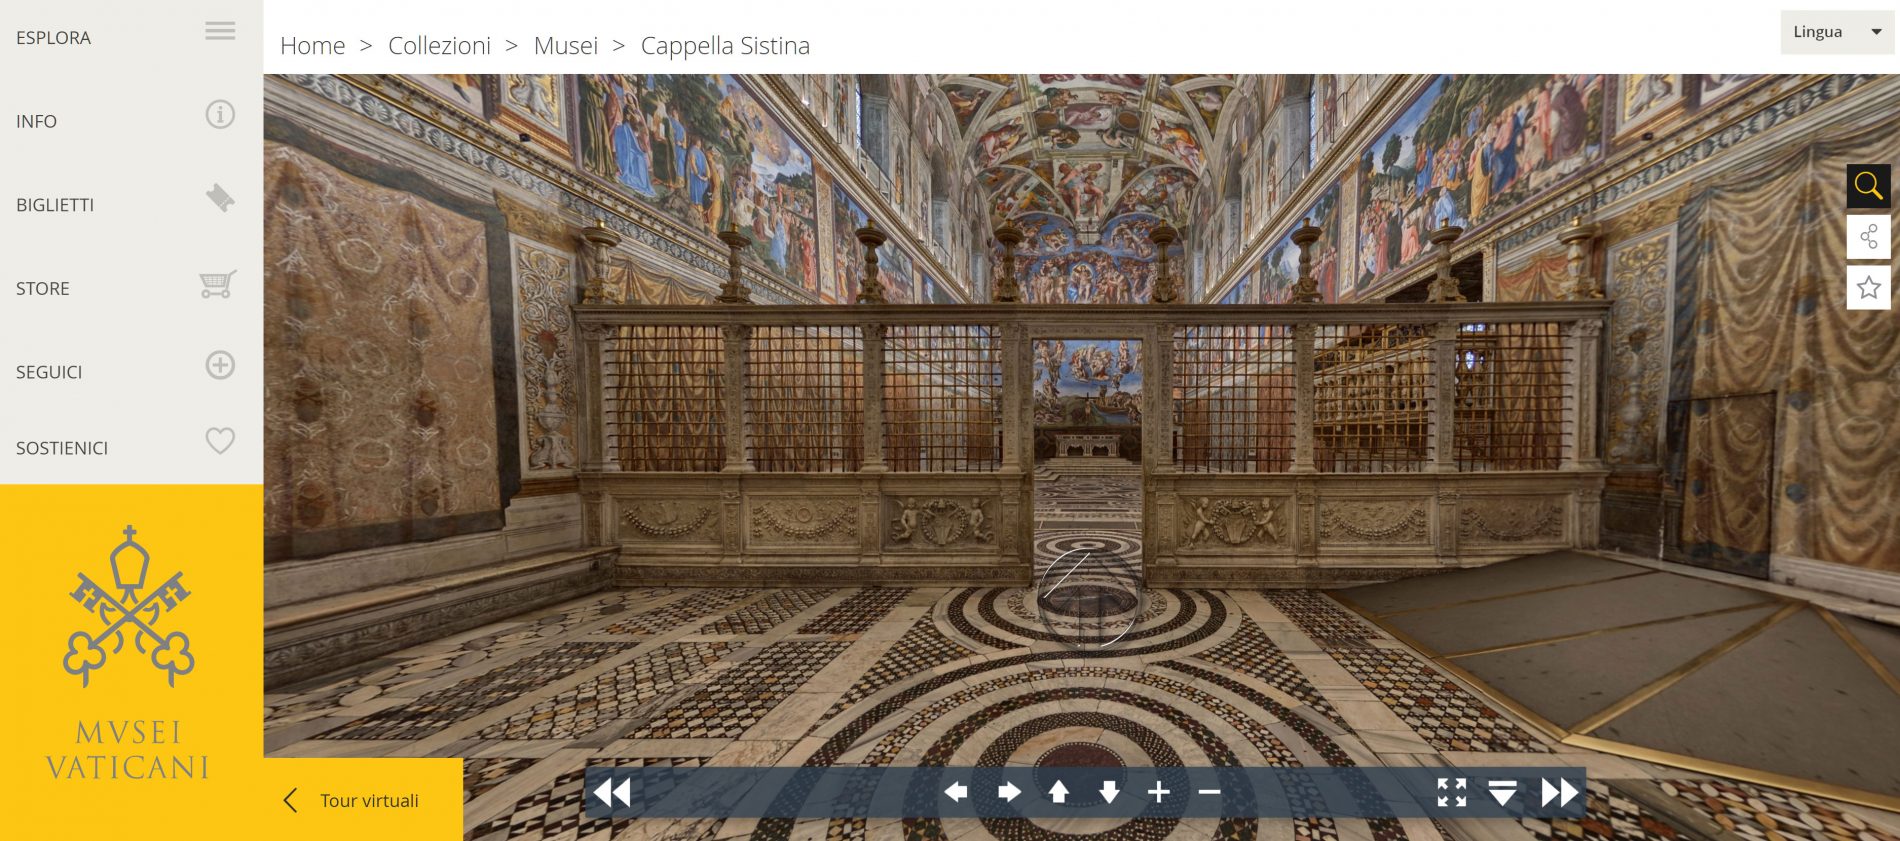 musei vaticani cappella sistina tour virtuale